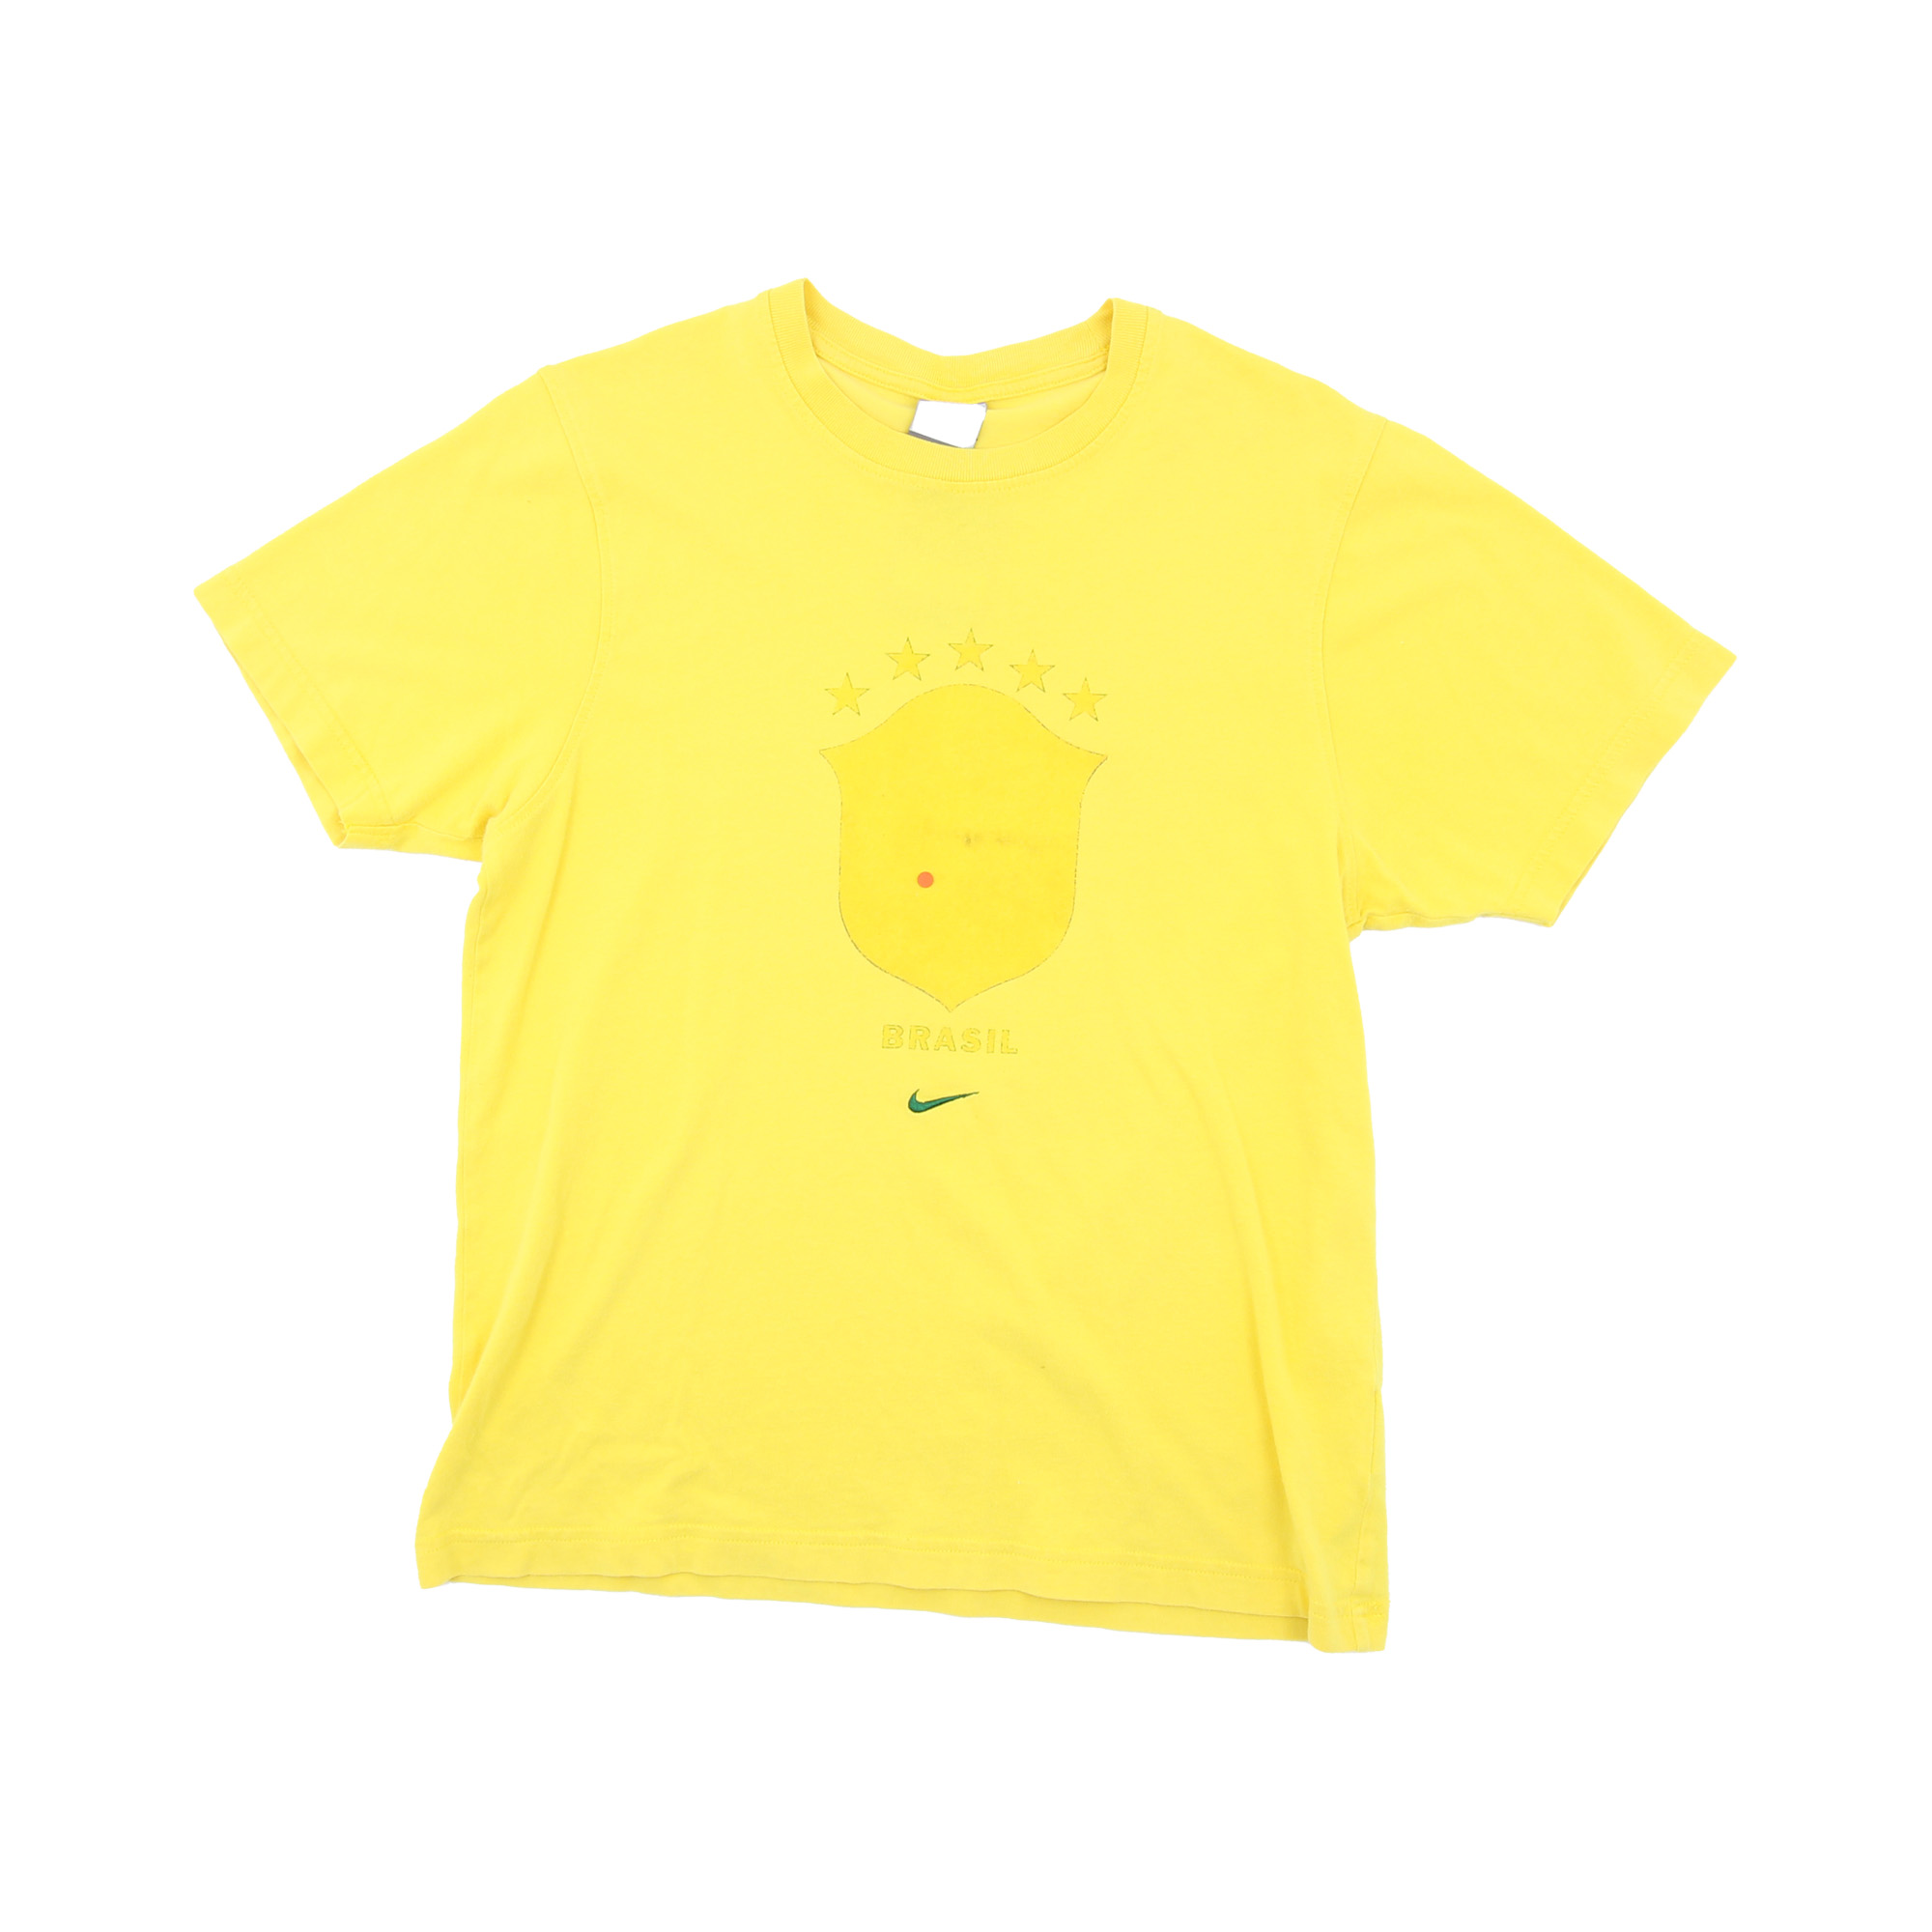 Nike T-Shirt Yellow -  M